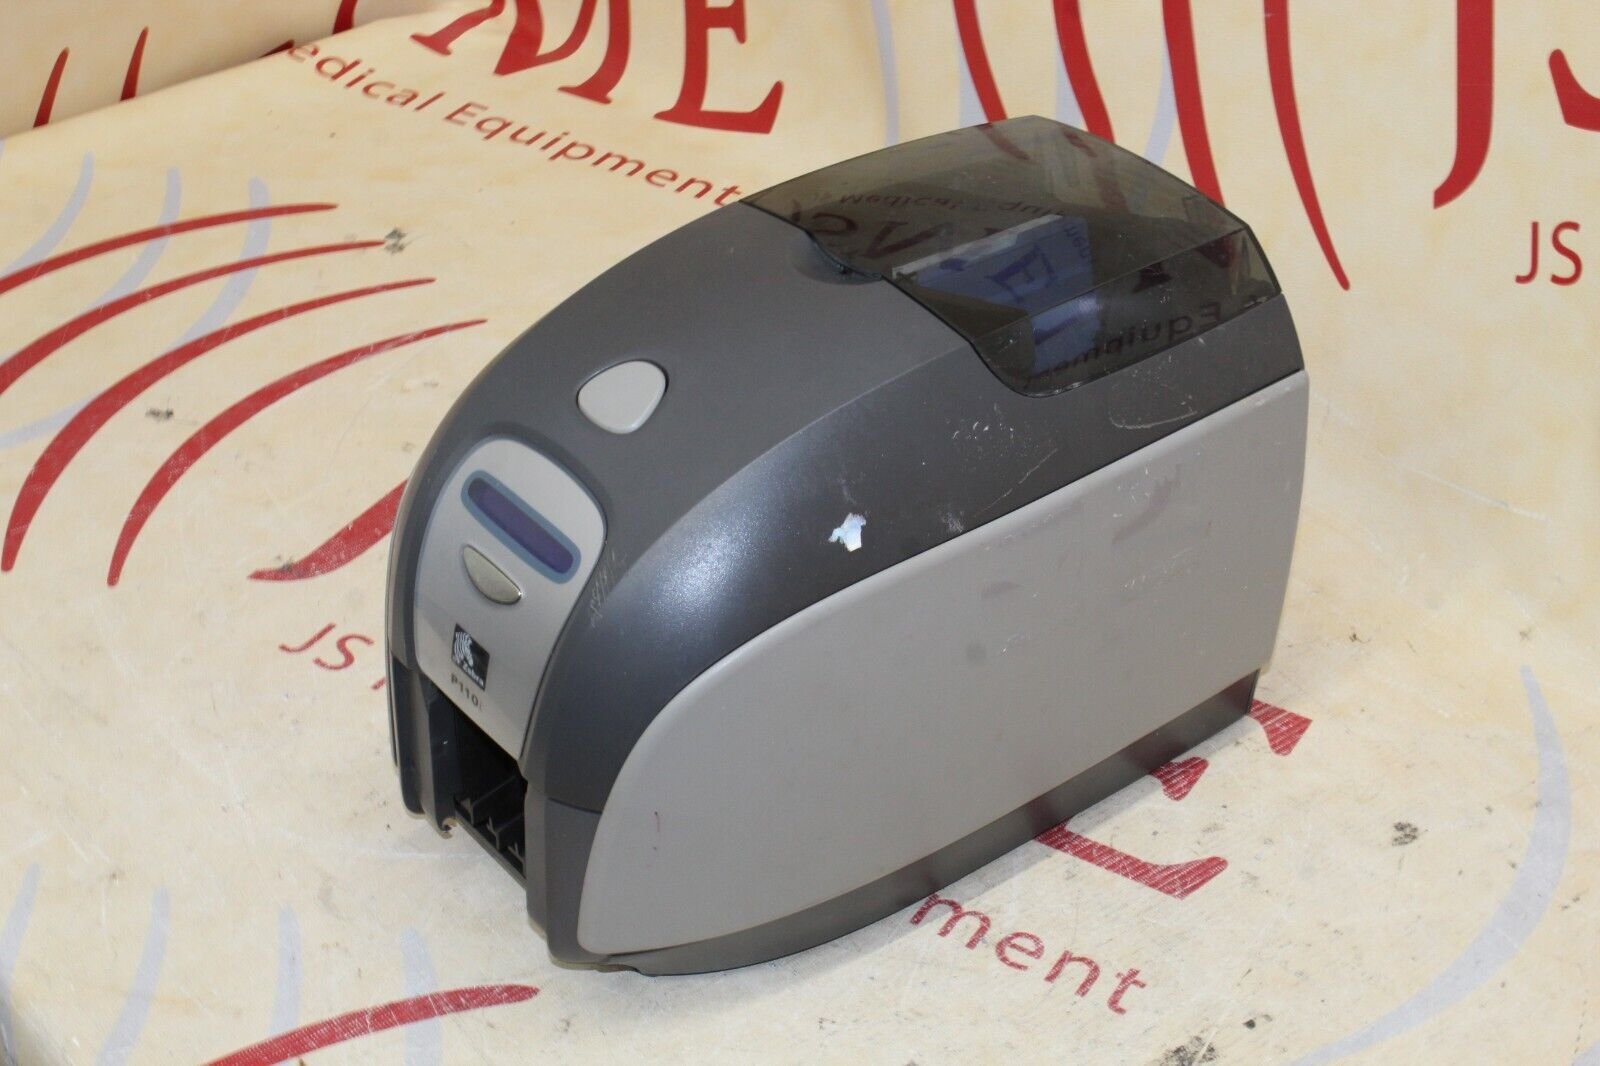 Zebra P110i Id Card Printer Js Medical Equipment 3014